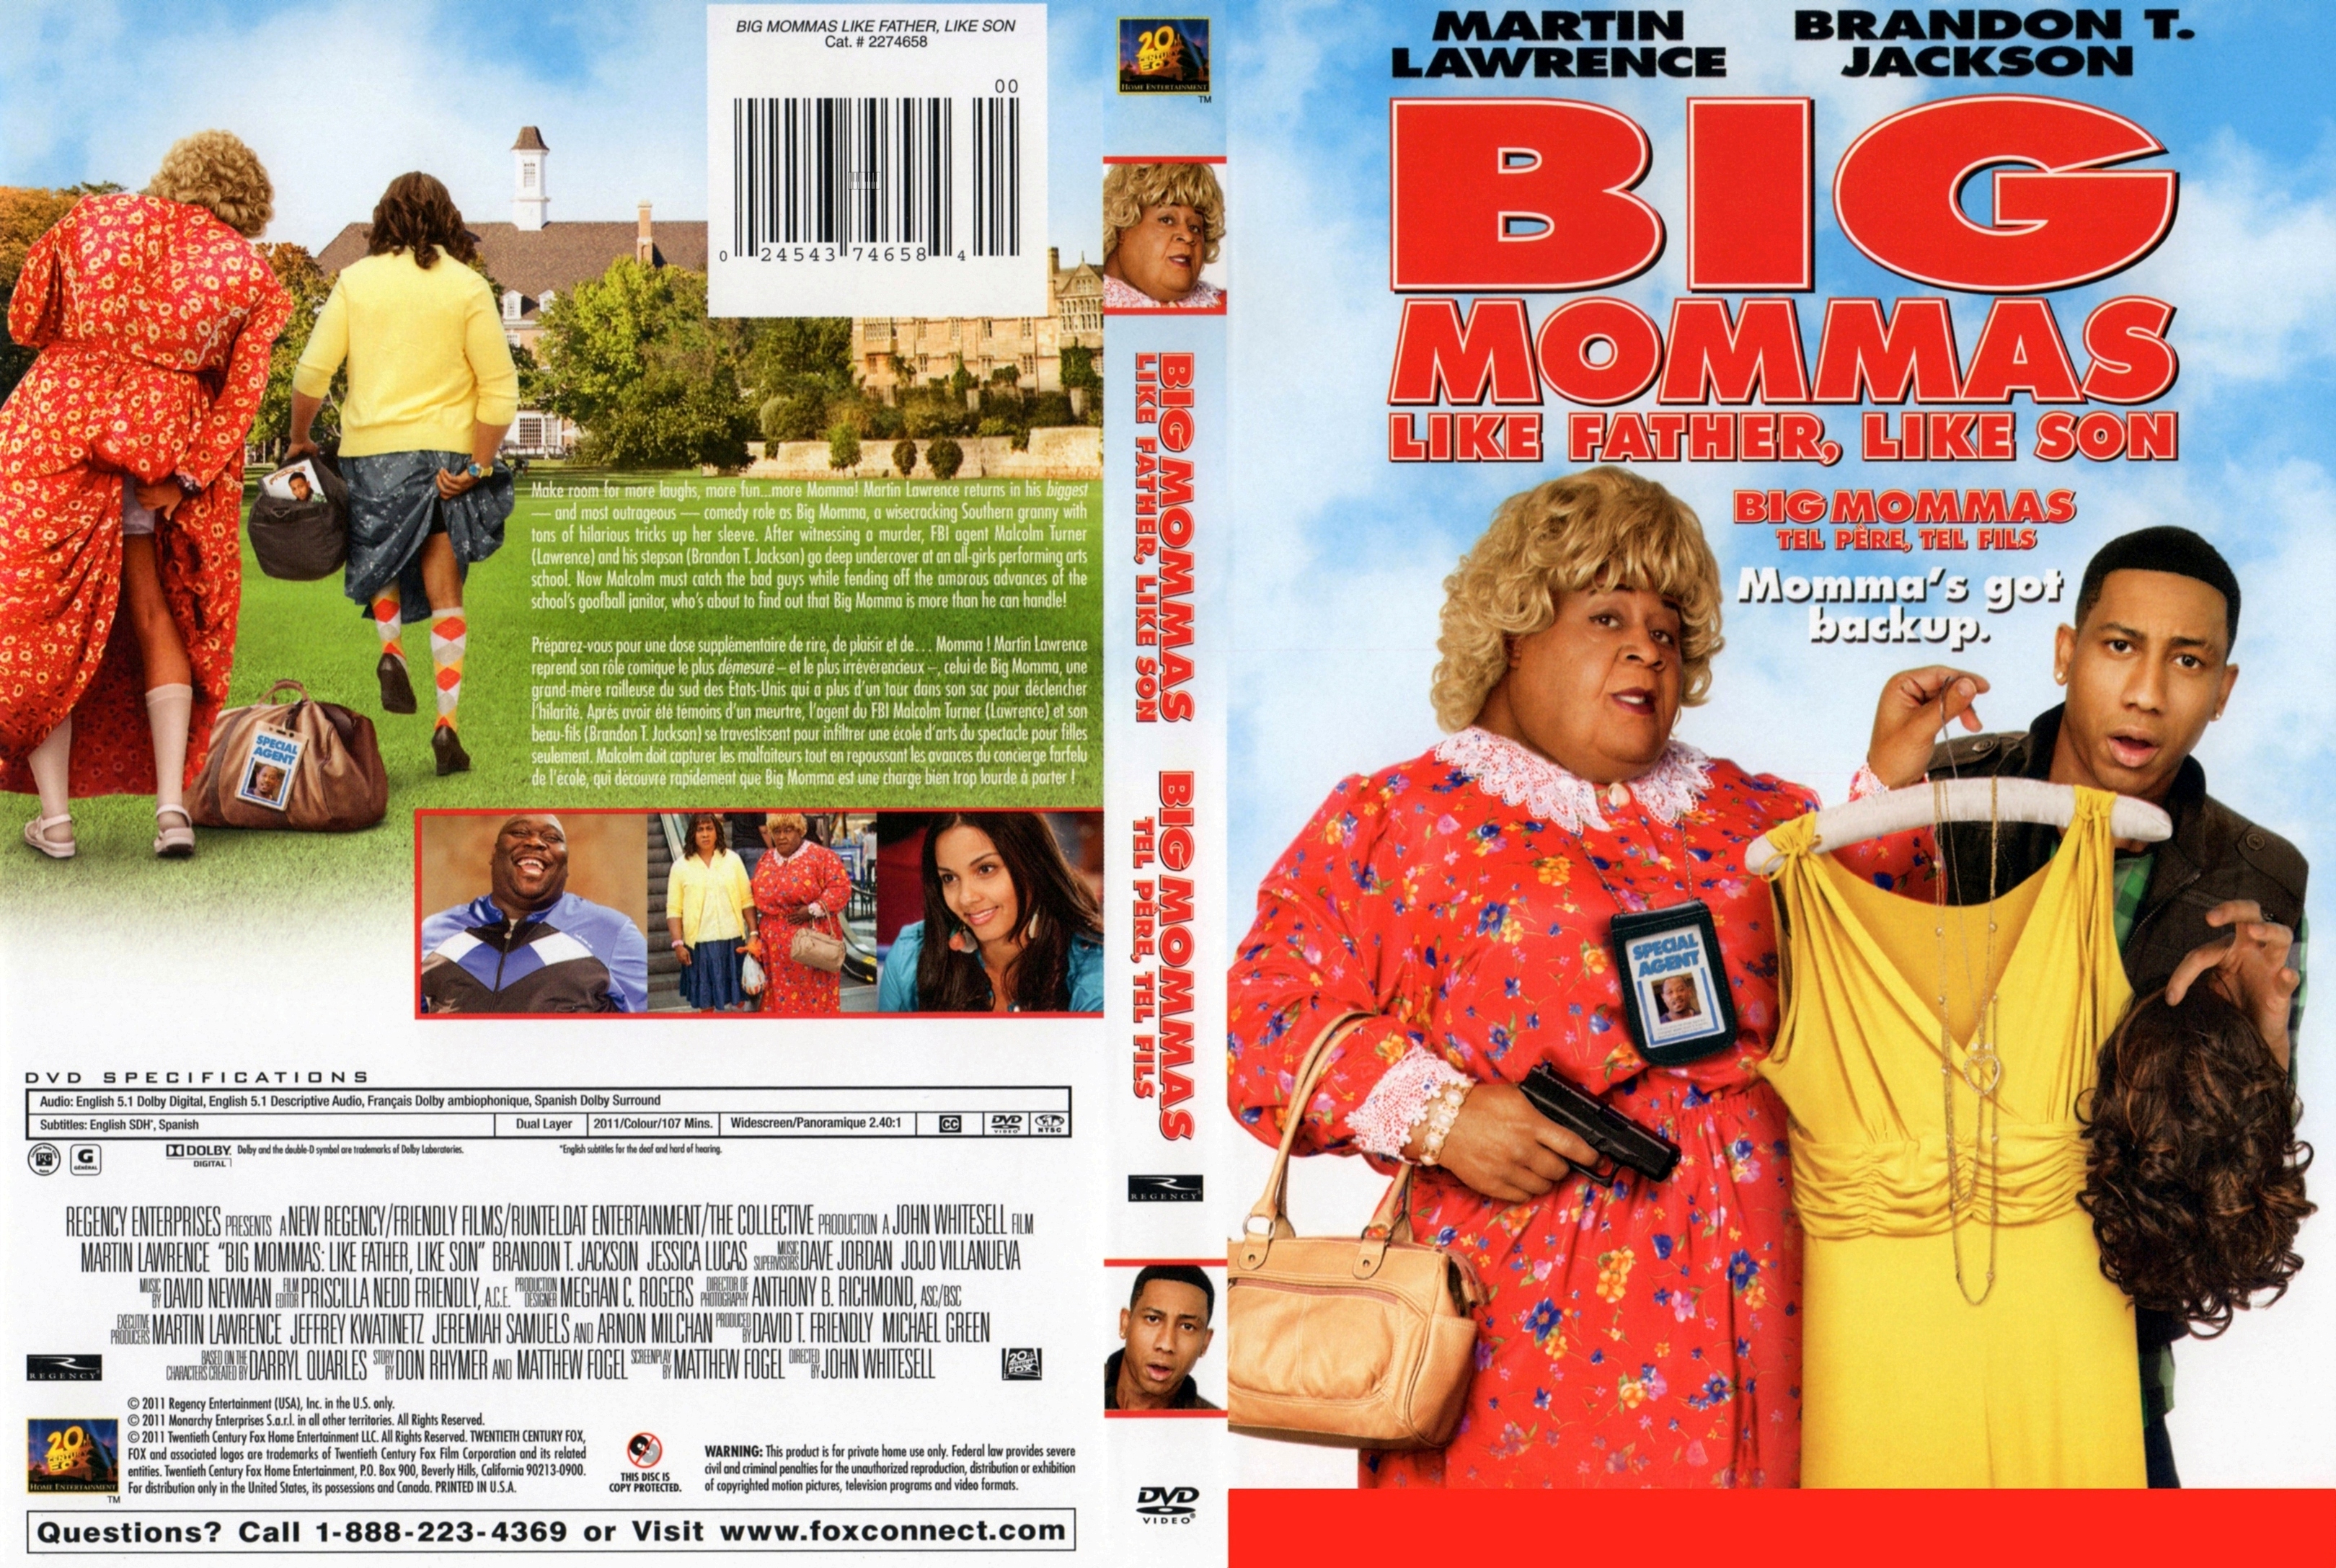 Jaquette DVD Big mommas tel pre tel fils - Big mommas like father like son (Canadienne)